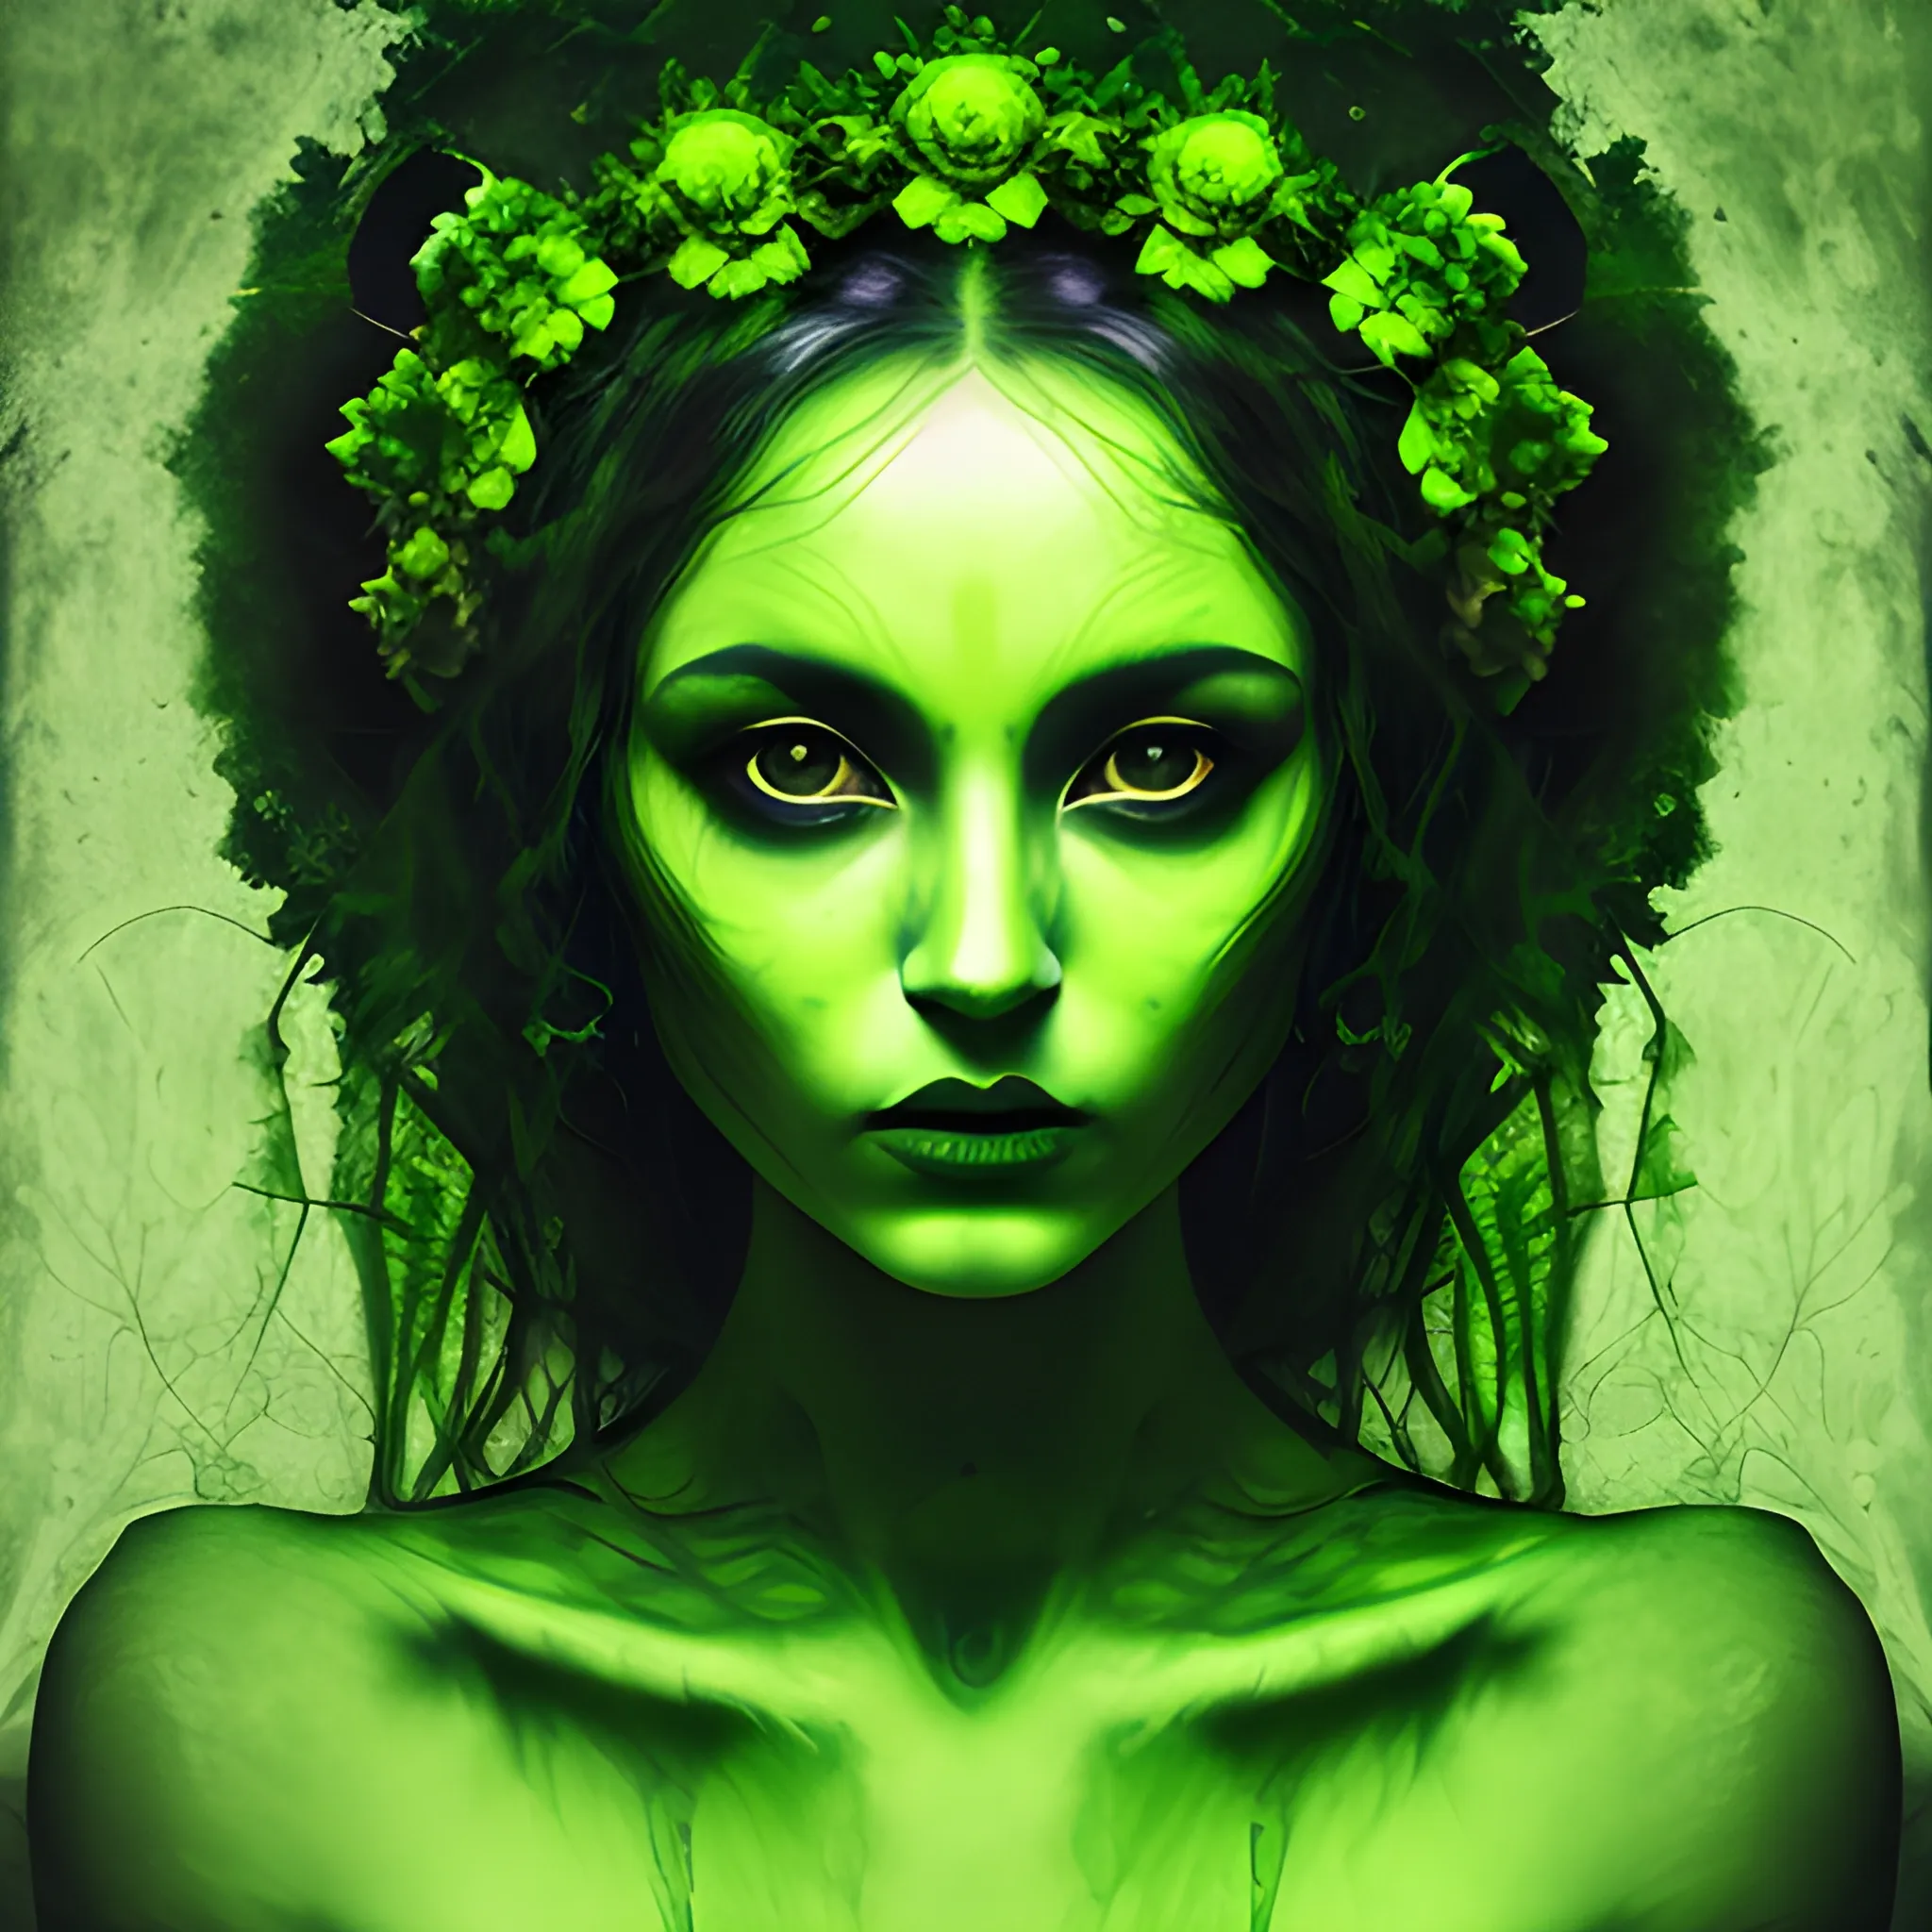 green mysterious woman, portrait version, deep and artistic, masterwork